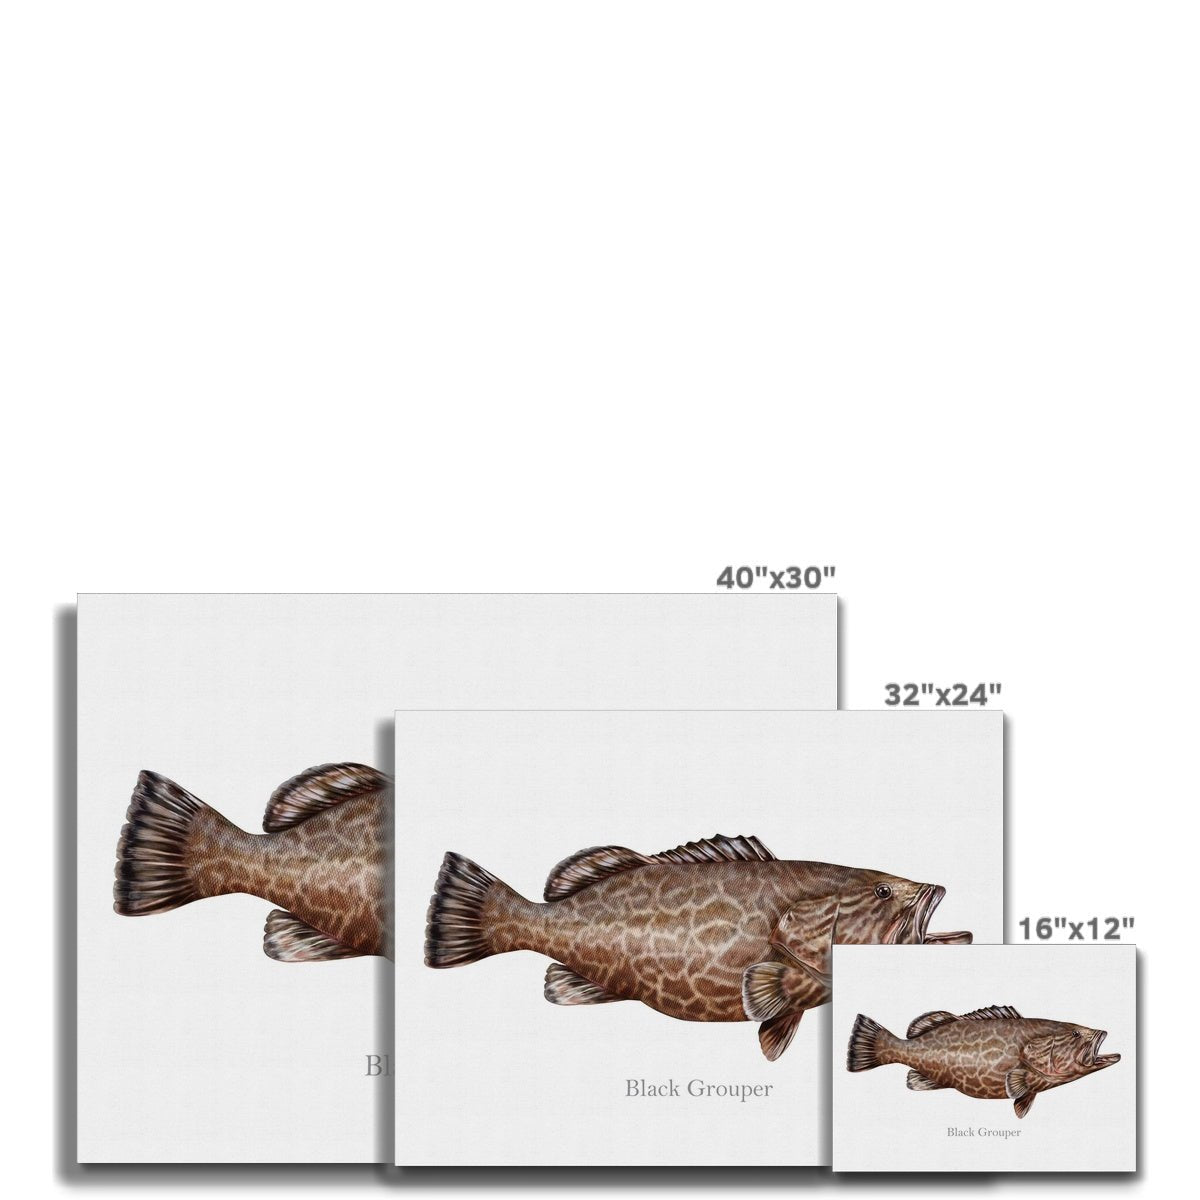 Black Grouper - Canvas Print - madfishlab.com